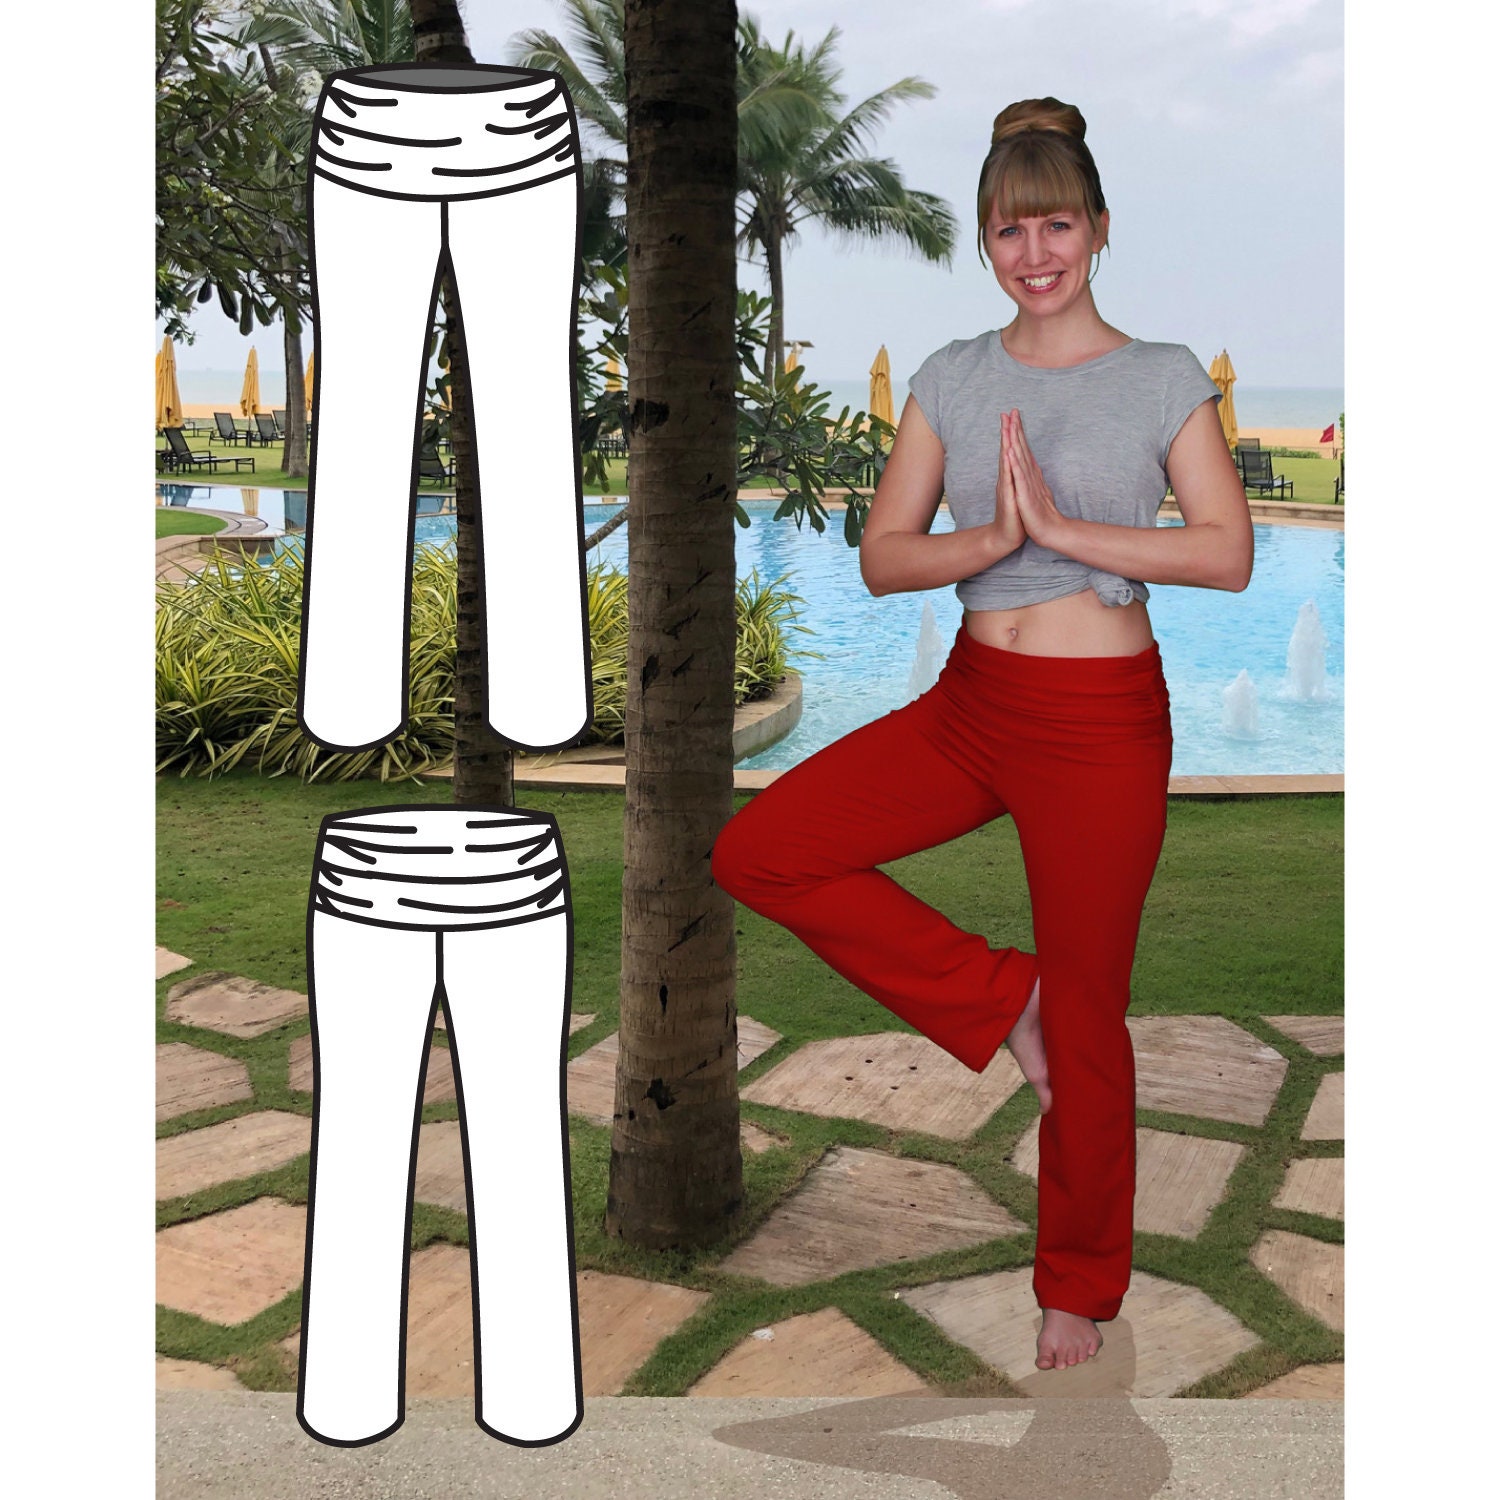 Womens Yoga Pants Pattern Flared Leggings Jazz Pants Pdf Sewing